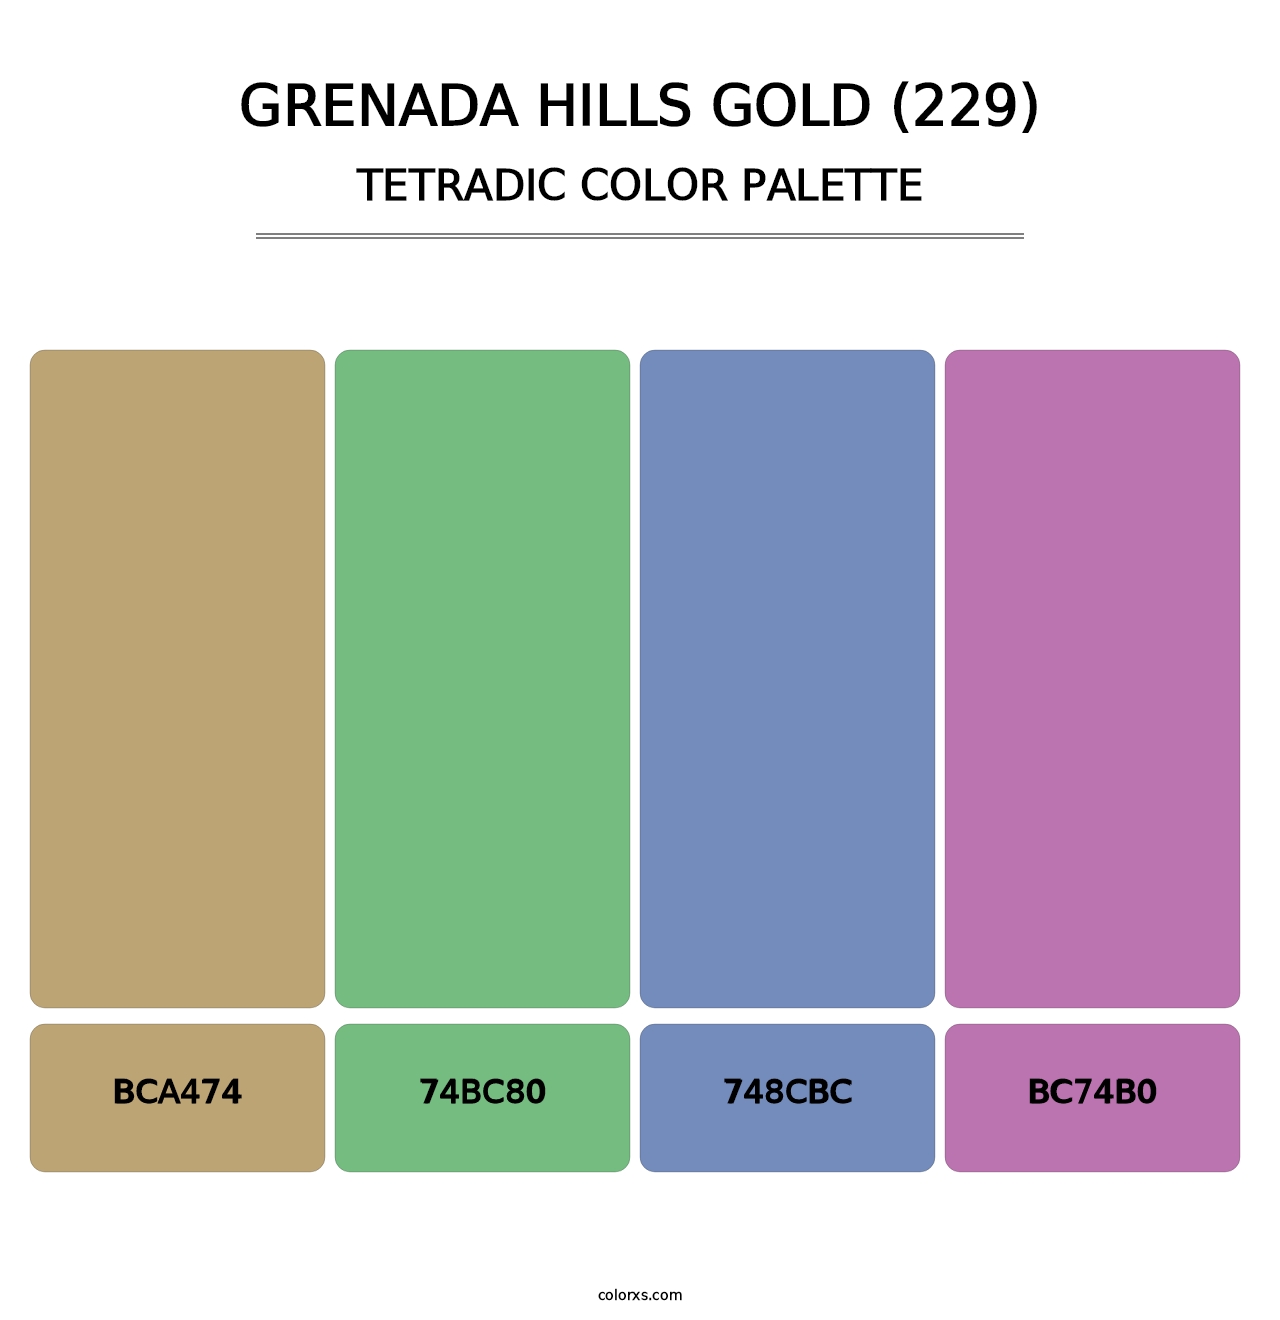 Grenada Hills Gold (229) - Tetradic Color Palette